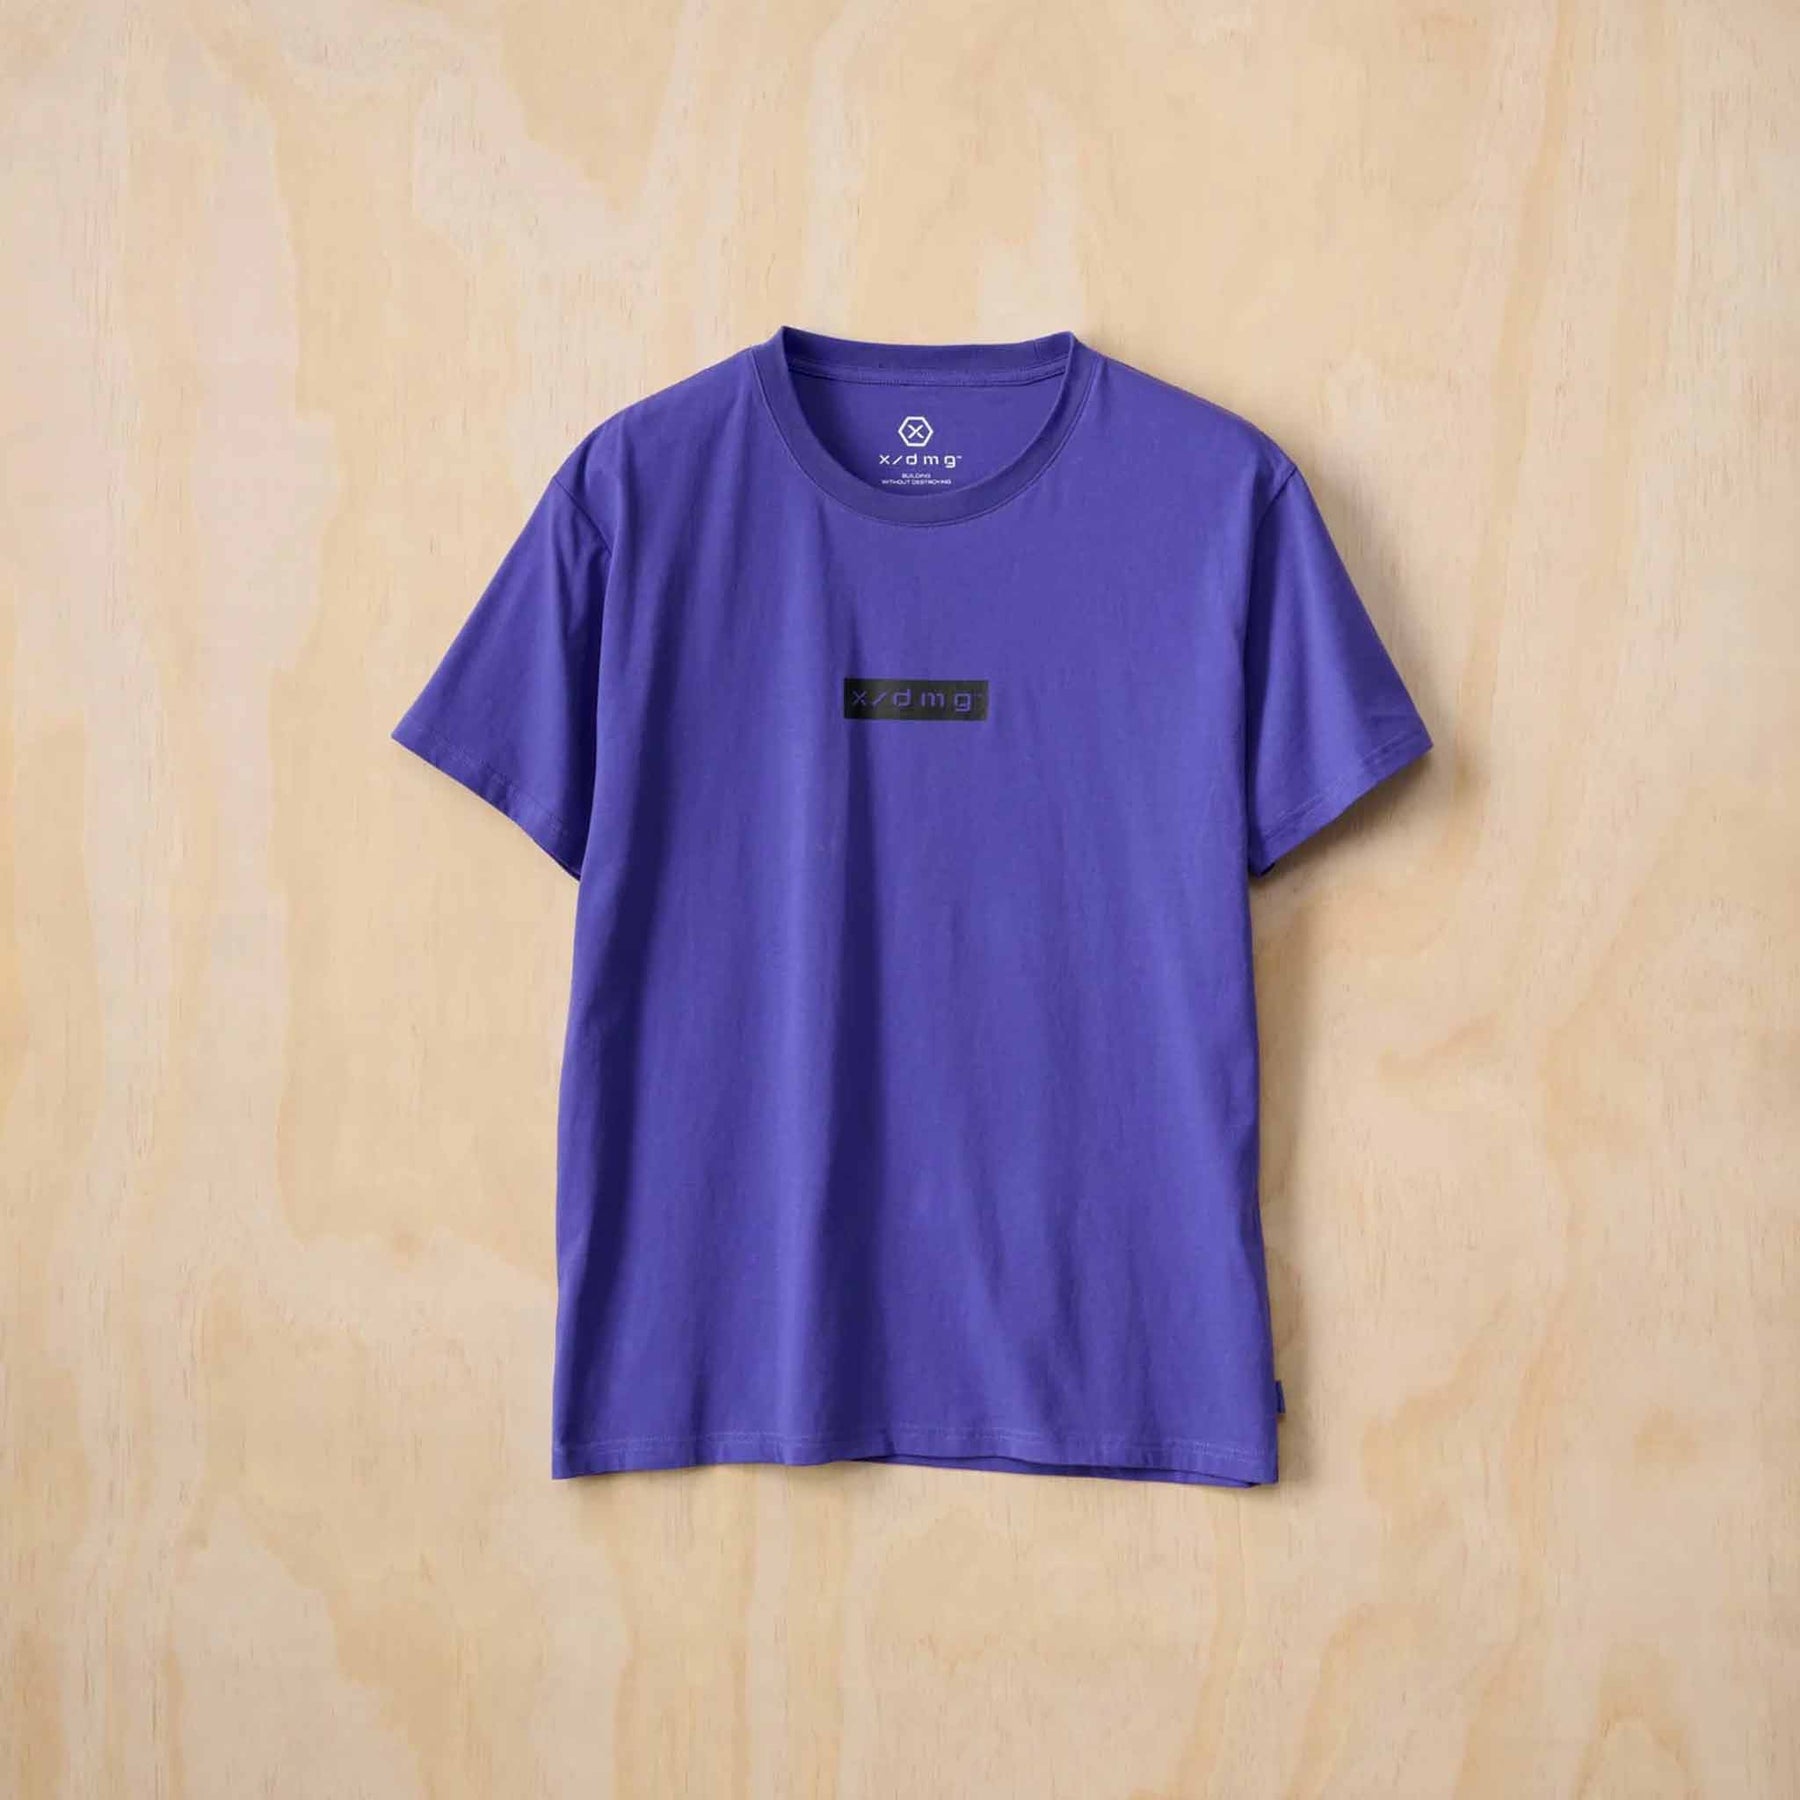 x/dmg logo short sleece tee in purple